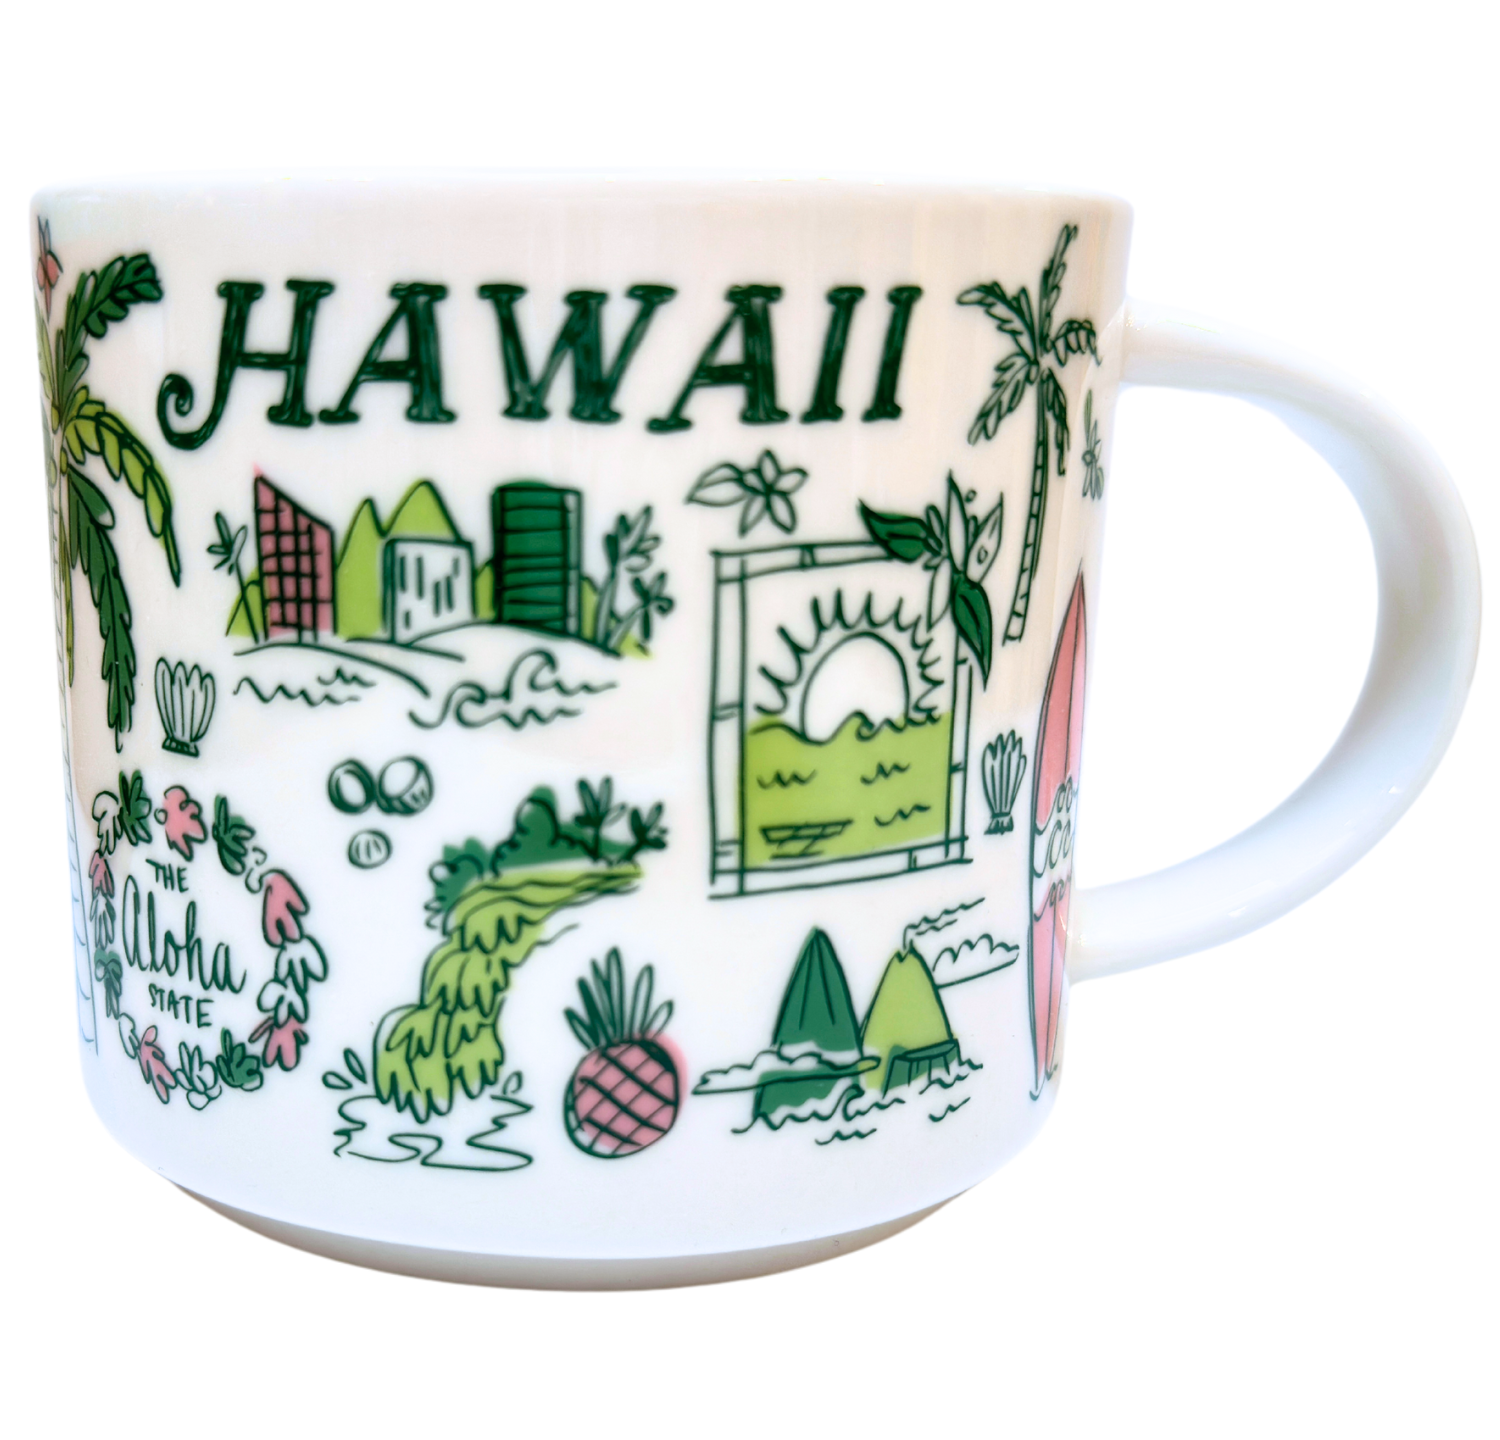 Starbucks Been There Series Hawaii Ceramic Mug, 14 Oz